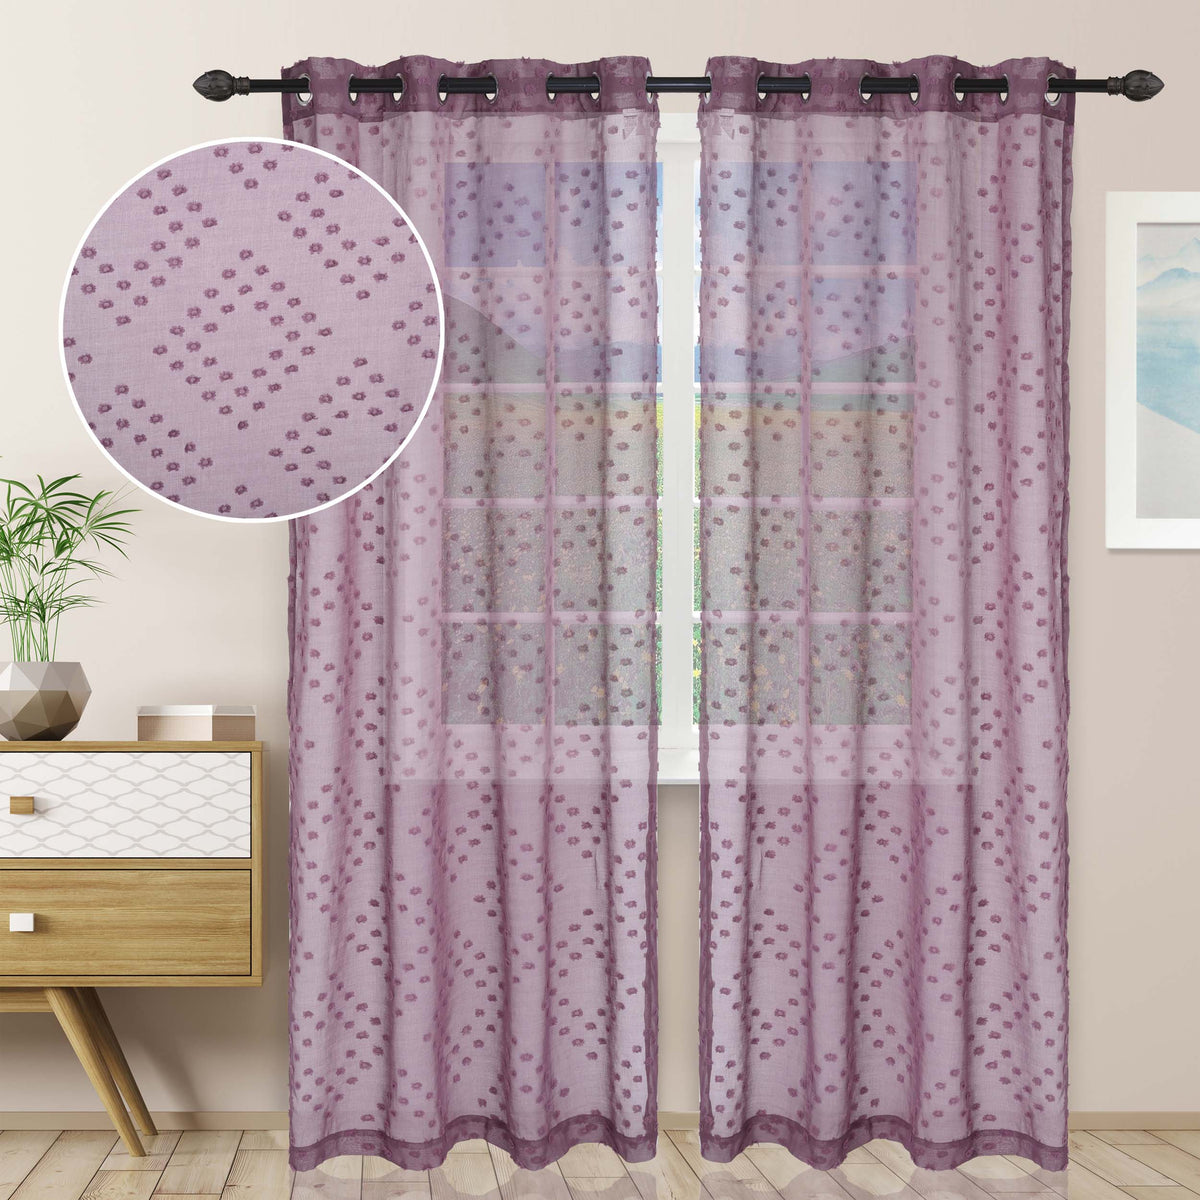  Sheer Poppy Floral Modern Textured Grommet Curtain Panels Set of 2 - VineyardWine